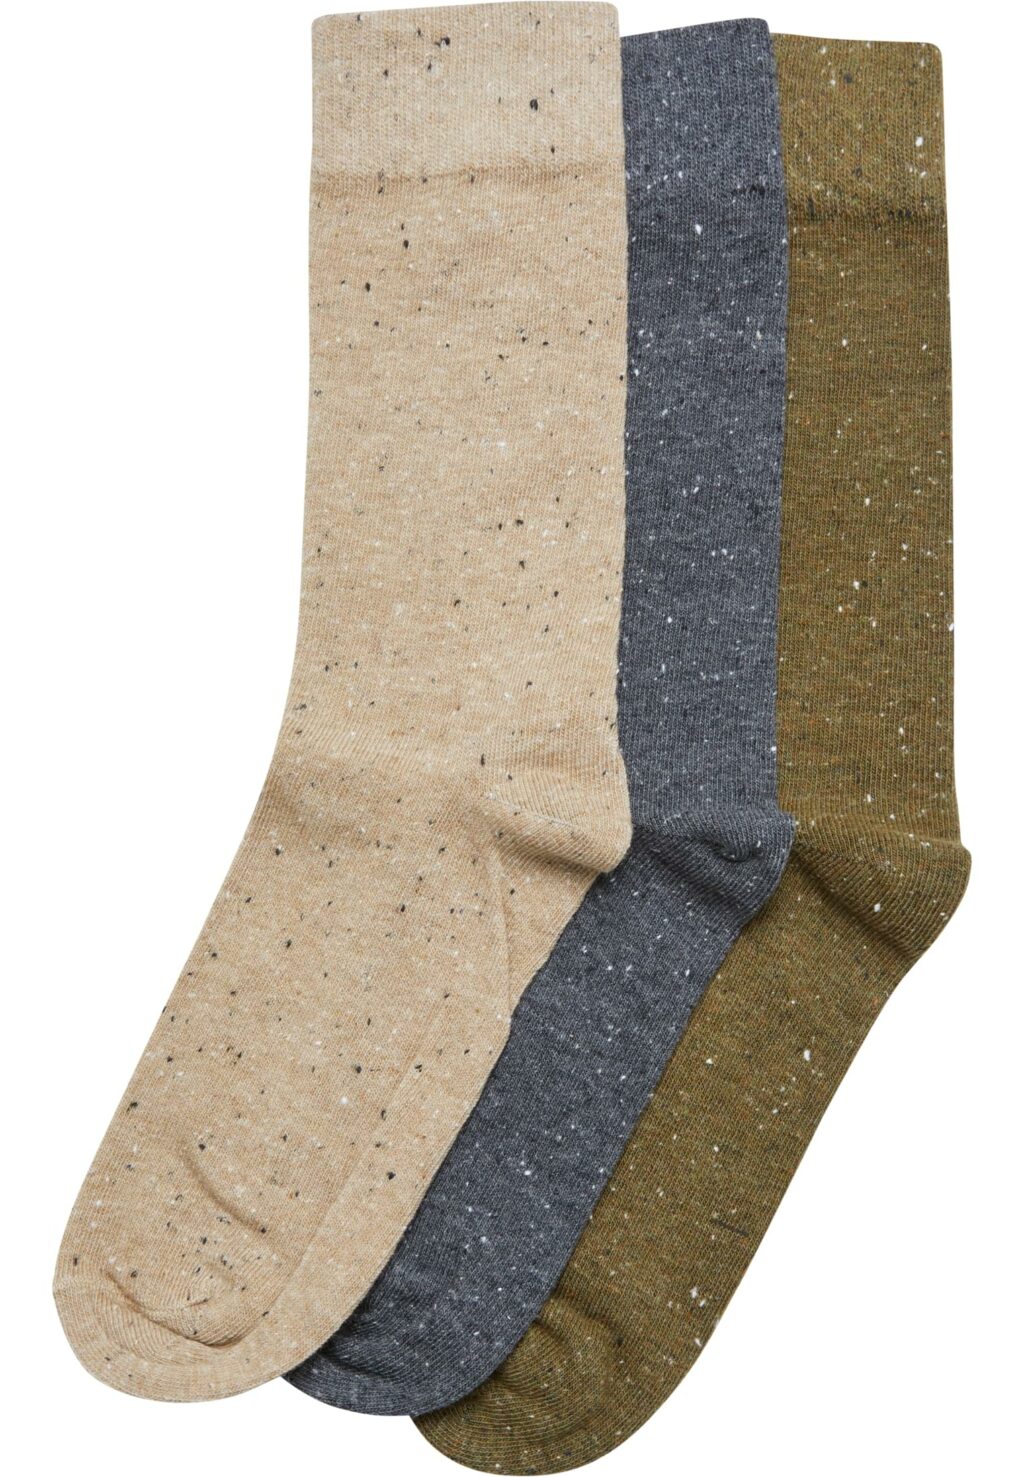 Naps Socks 3-Pack warmsand/darkshadow/summerolive TB6544